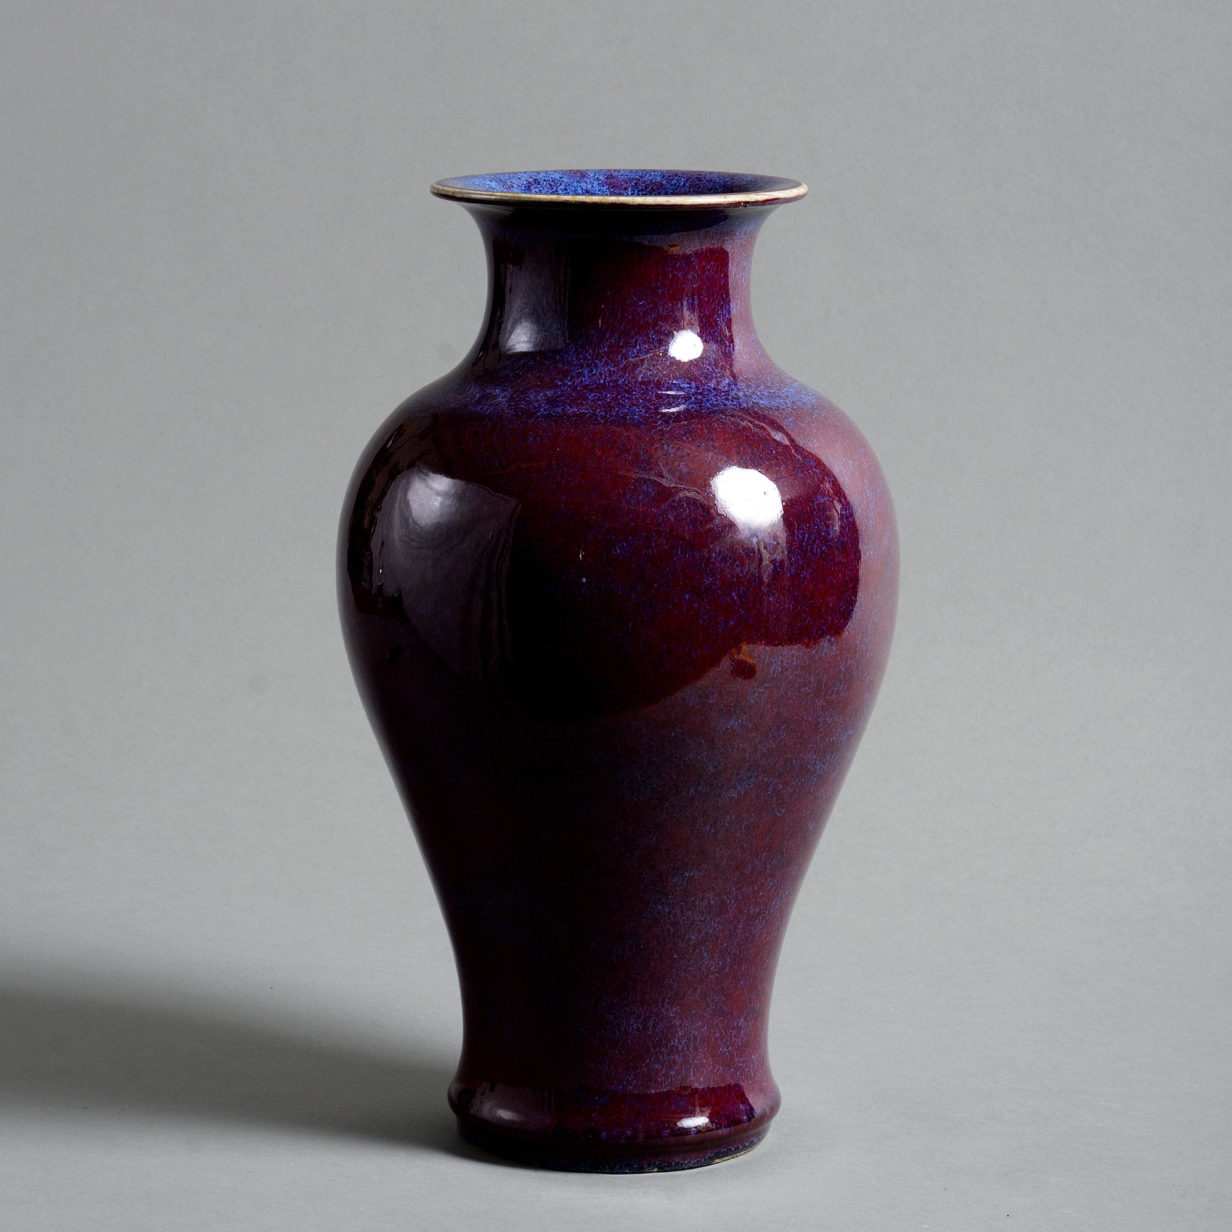 A 19th Century Qing Dynasty Sang de Boeuf or Flambé Vase